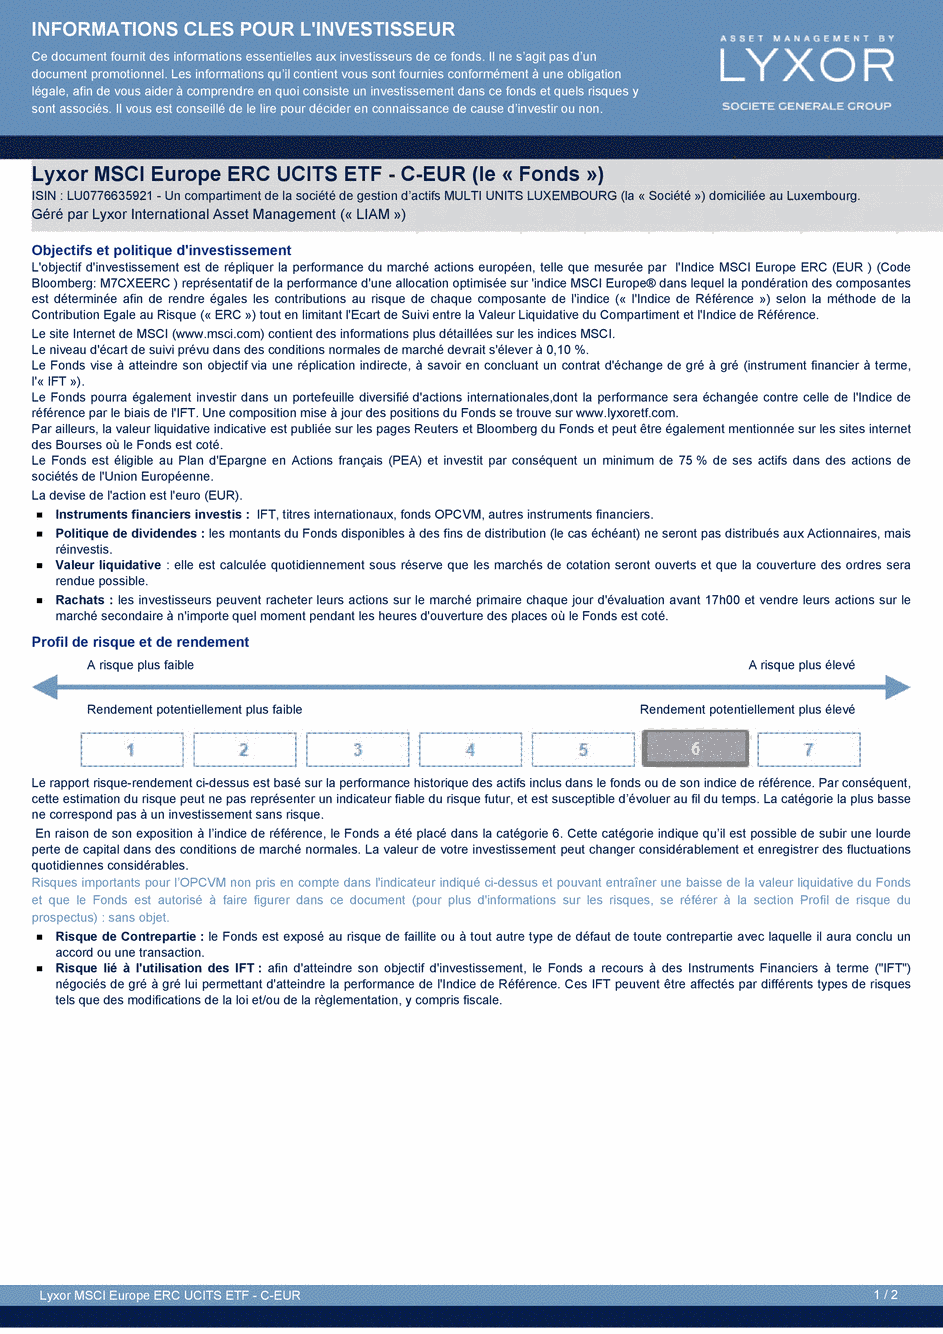 DICI LYXOR UCITS ETF SMARTIX EURO iSTOXX 50 Equal Risk - C-EUR - 15/02/2016 - Français